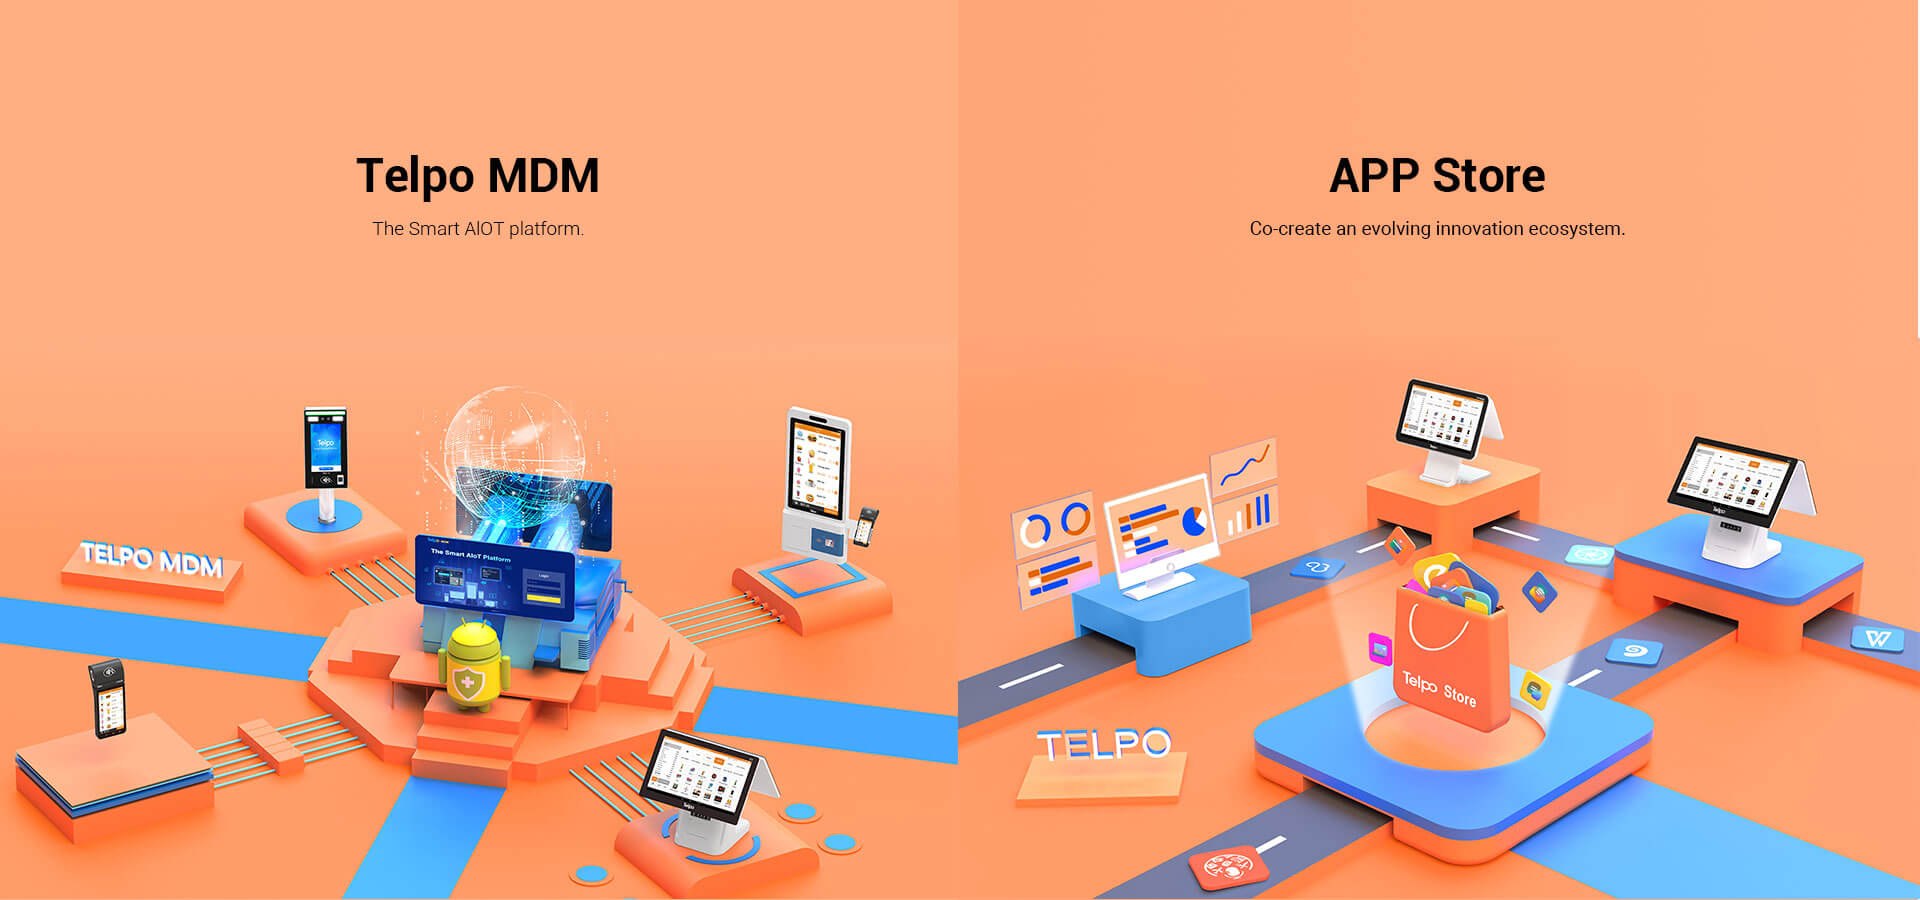 telpo mdm and app store